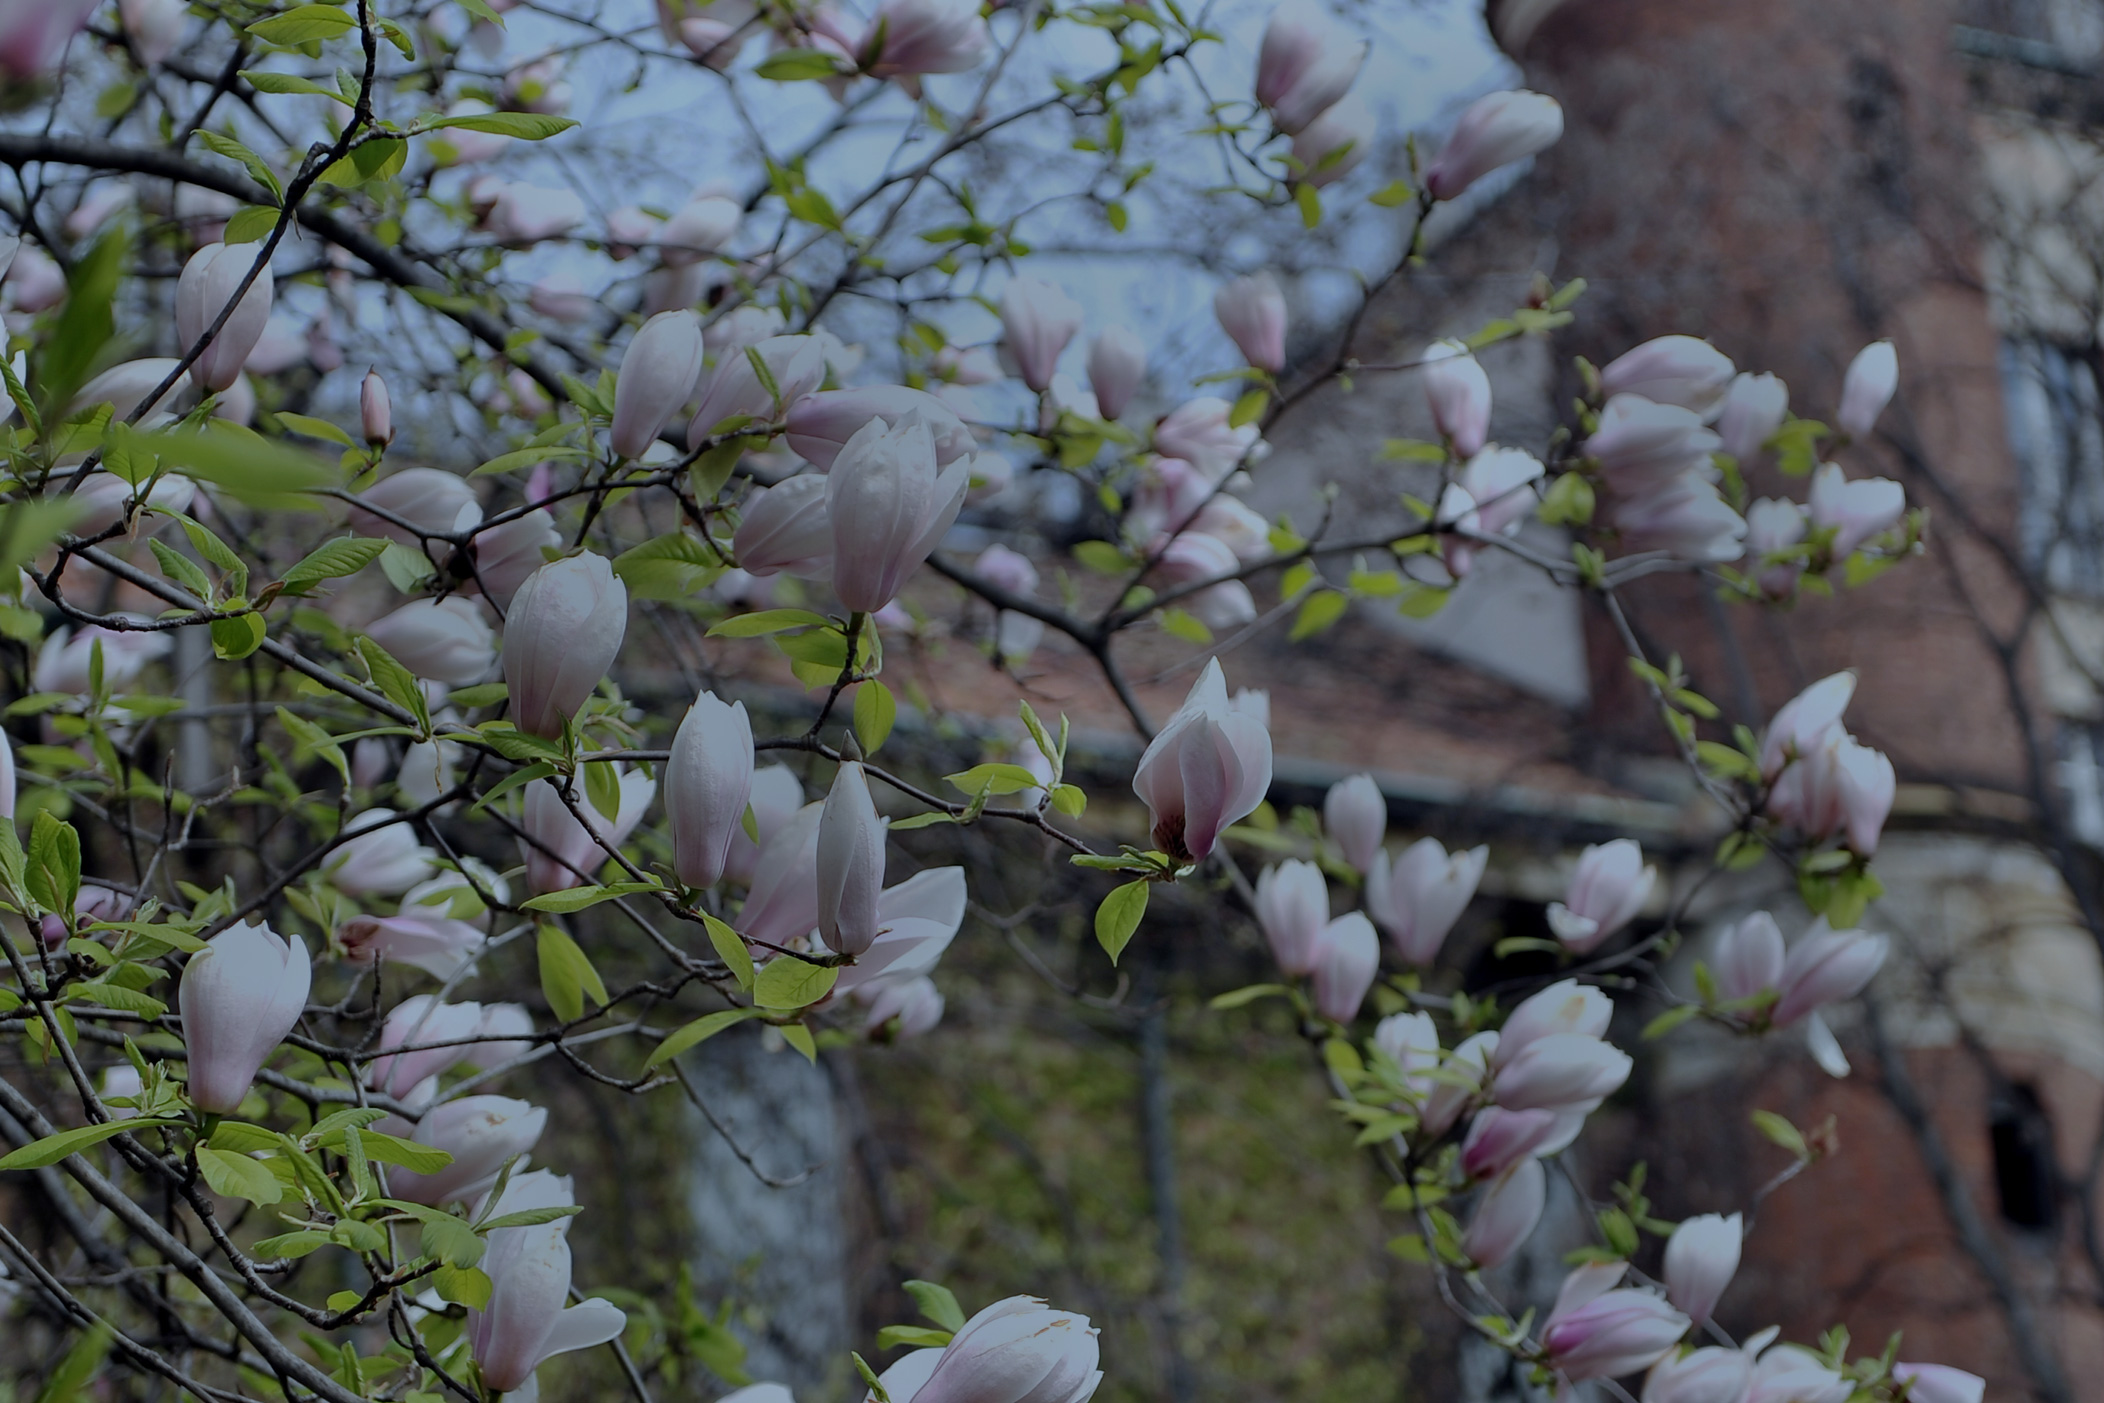 Magnolia all'orto botanico